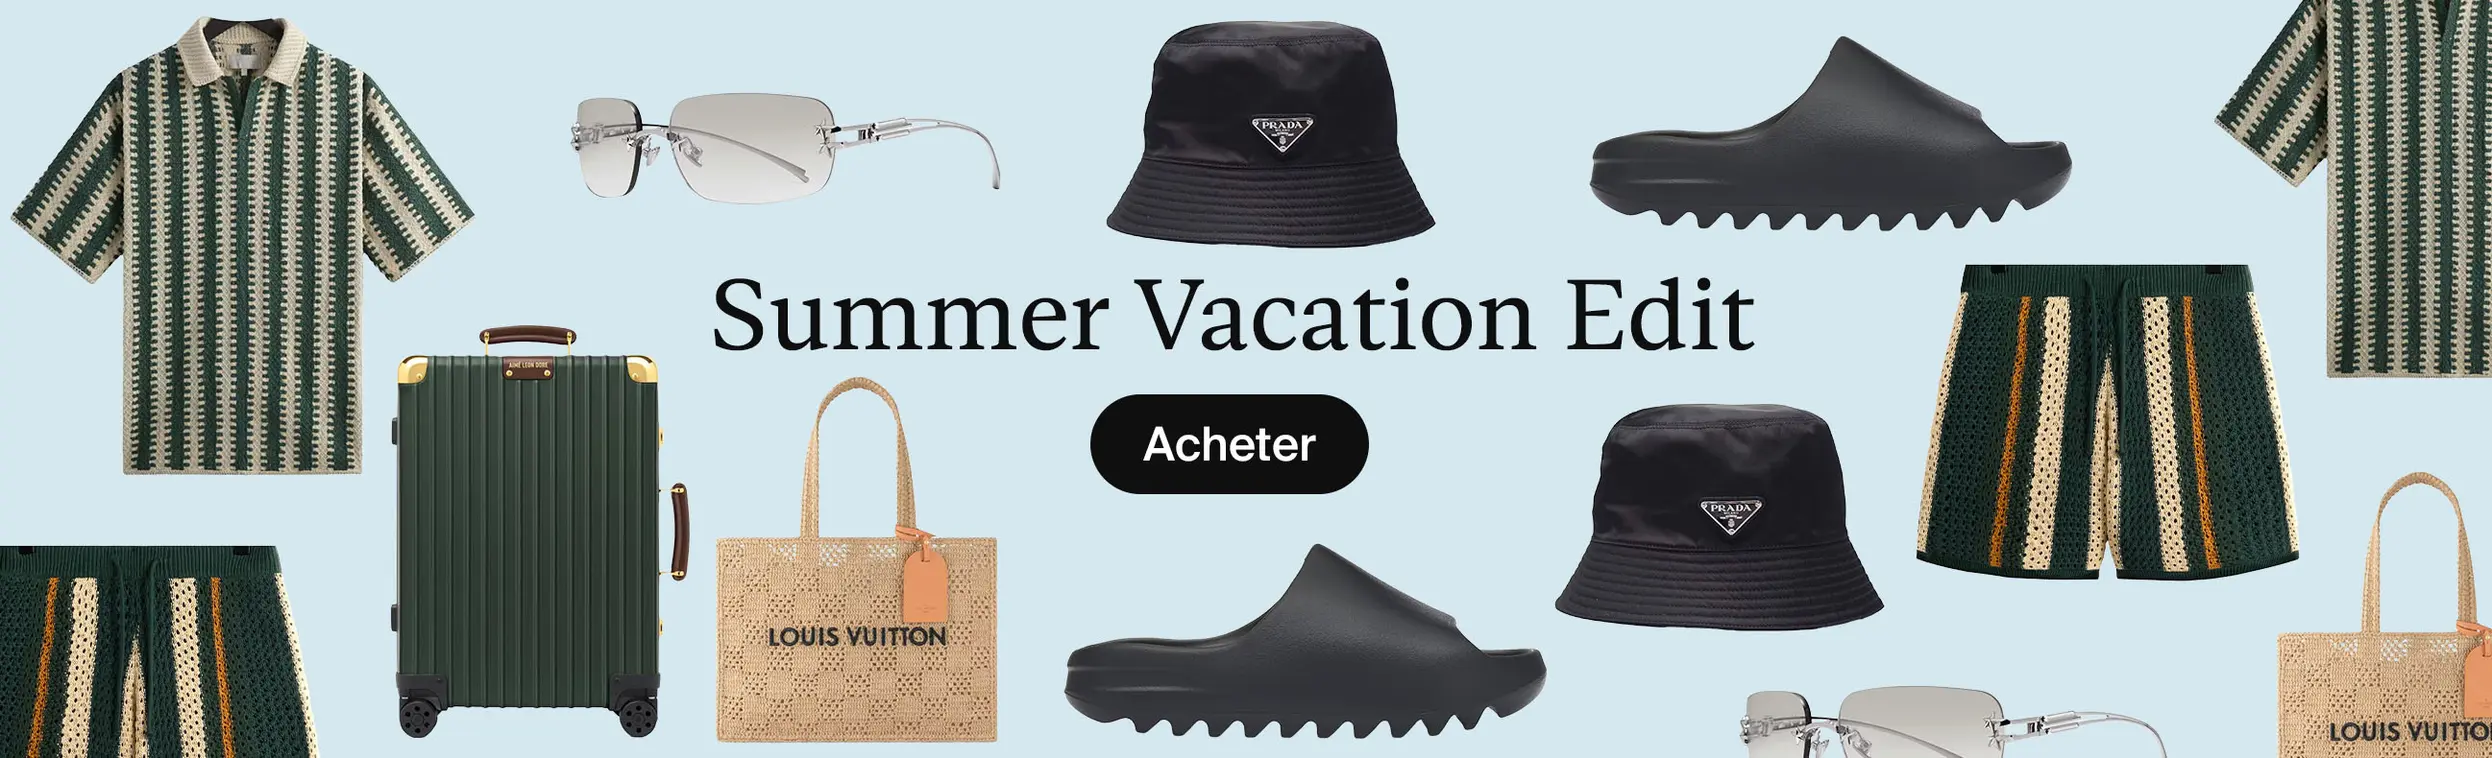 Summer_Vacation_Shop-Banners-FRPrimary_Desktop copy.jpg